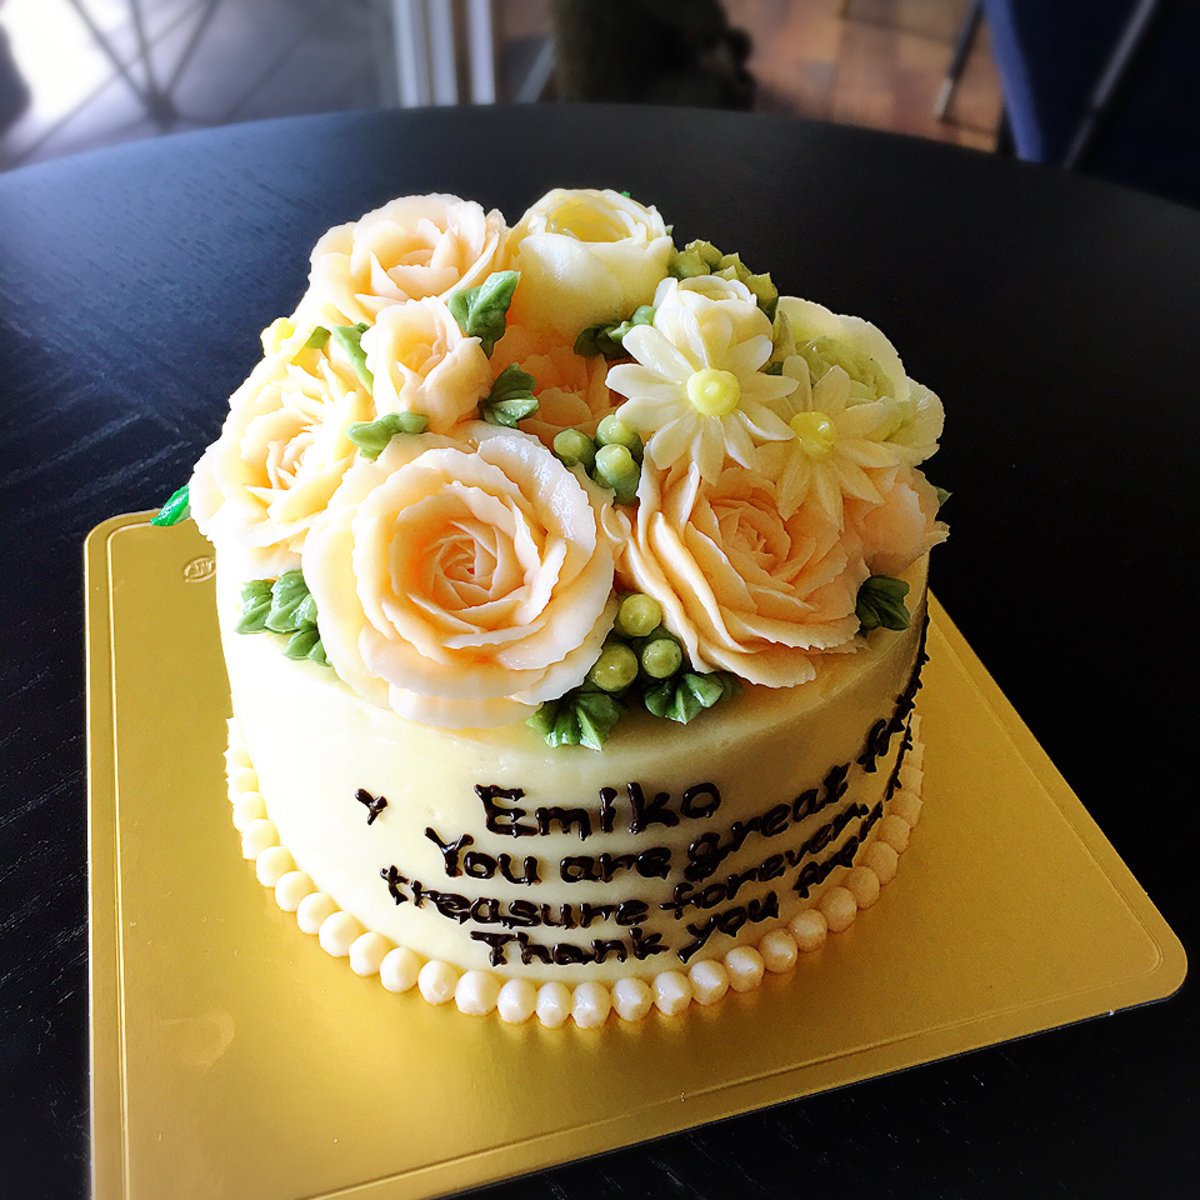 Cafe De Realite En Twitter Vaseの通販サイトよりお問合せオーダー 発送済みです お花絞り ケーキ Flowercake Flower フラワーケーキ お花 可愛い バタークリームフラワー 岐阜 通販サイト オーダーケーキ Ordercake カフェドリアリティ